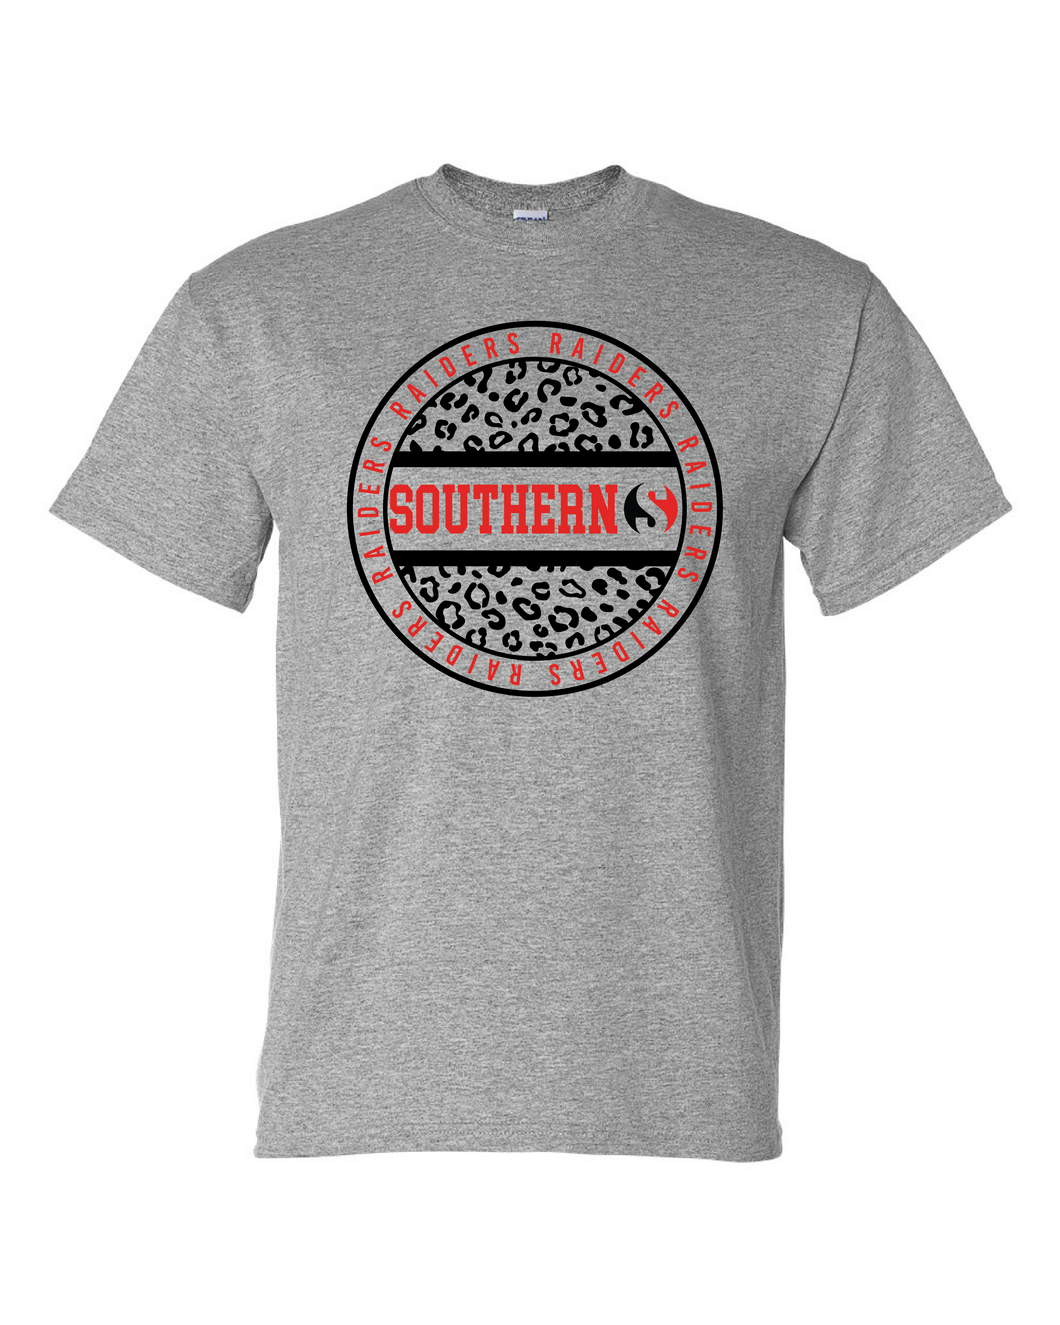 Southern Tshirt Design 3